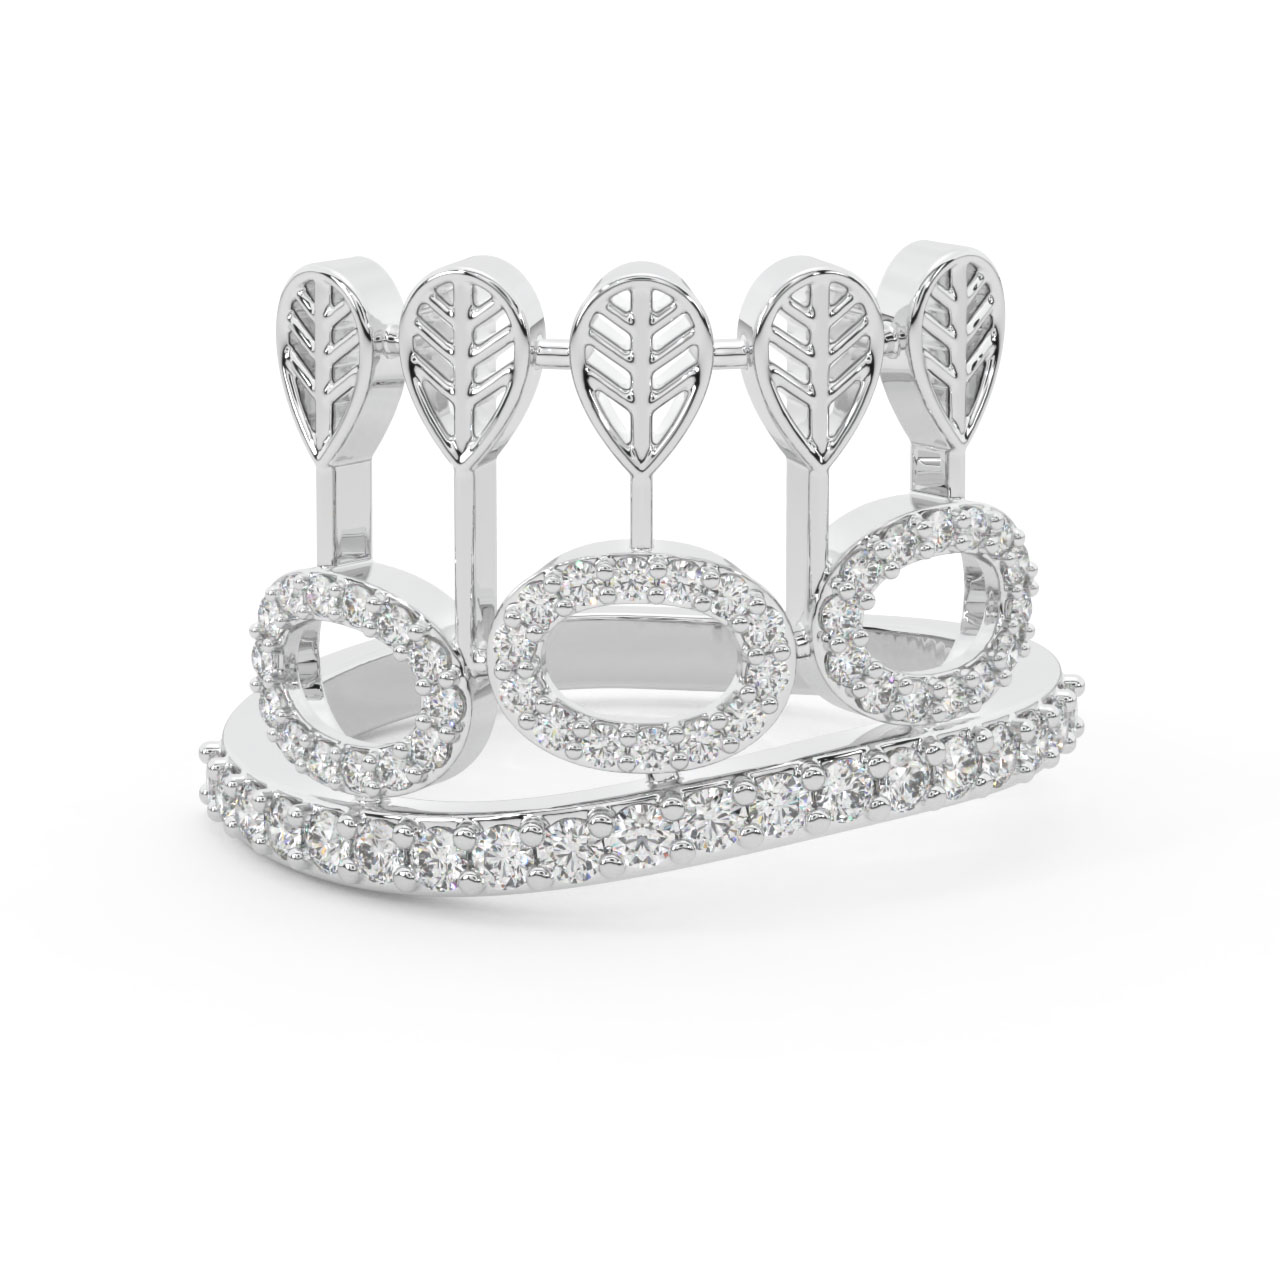 Siolat Round Diamond Engagement Ring